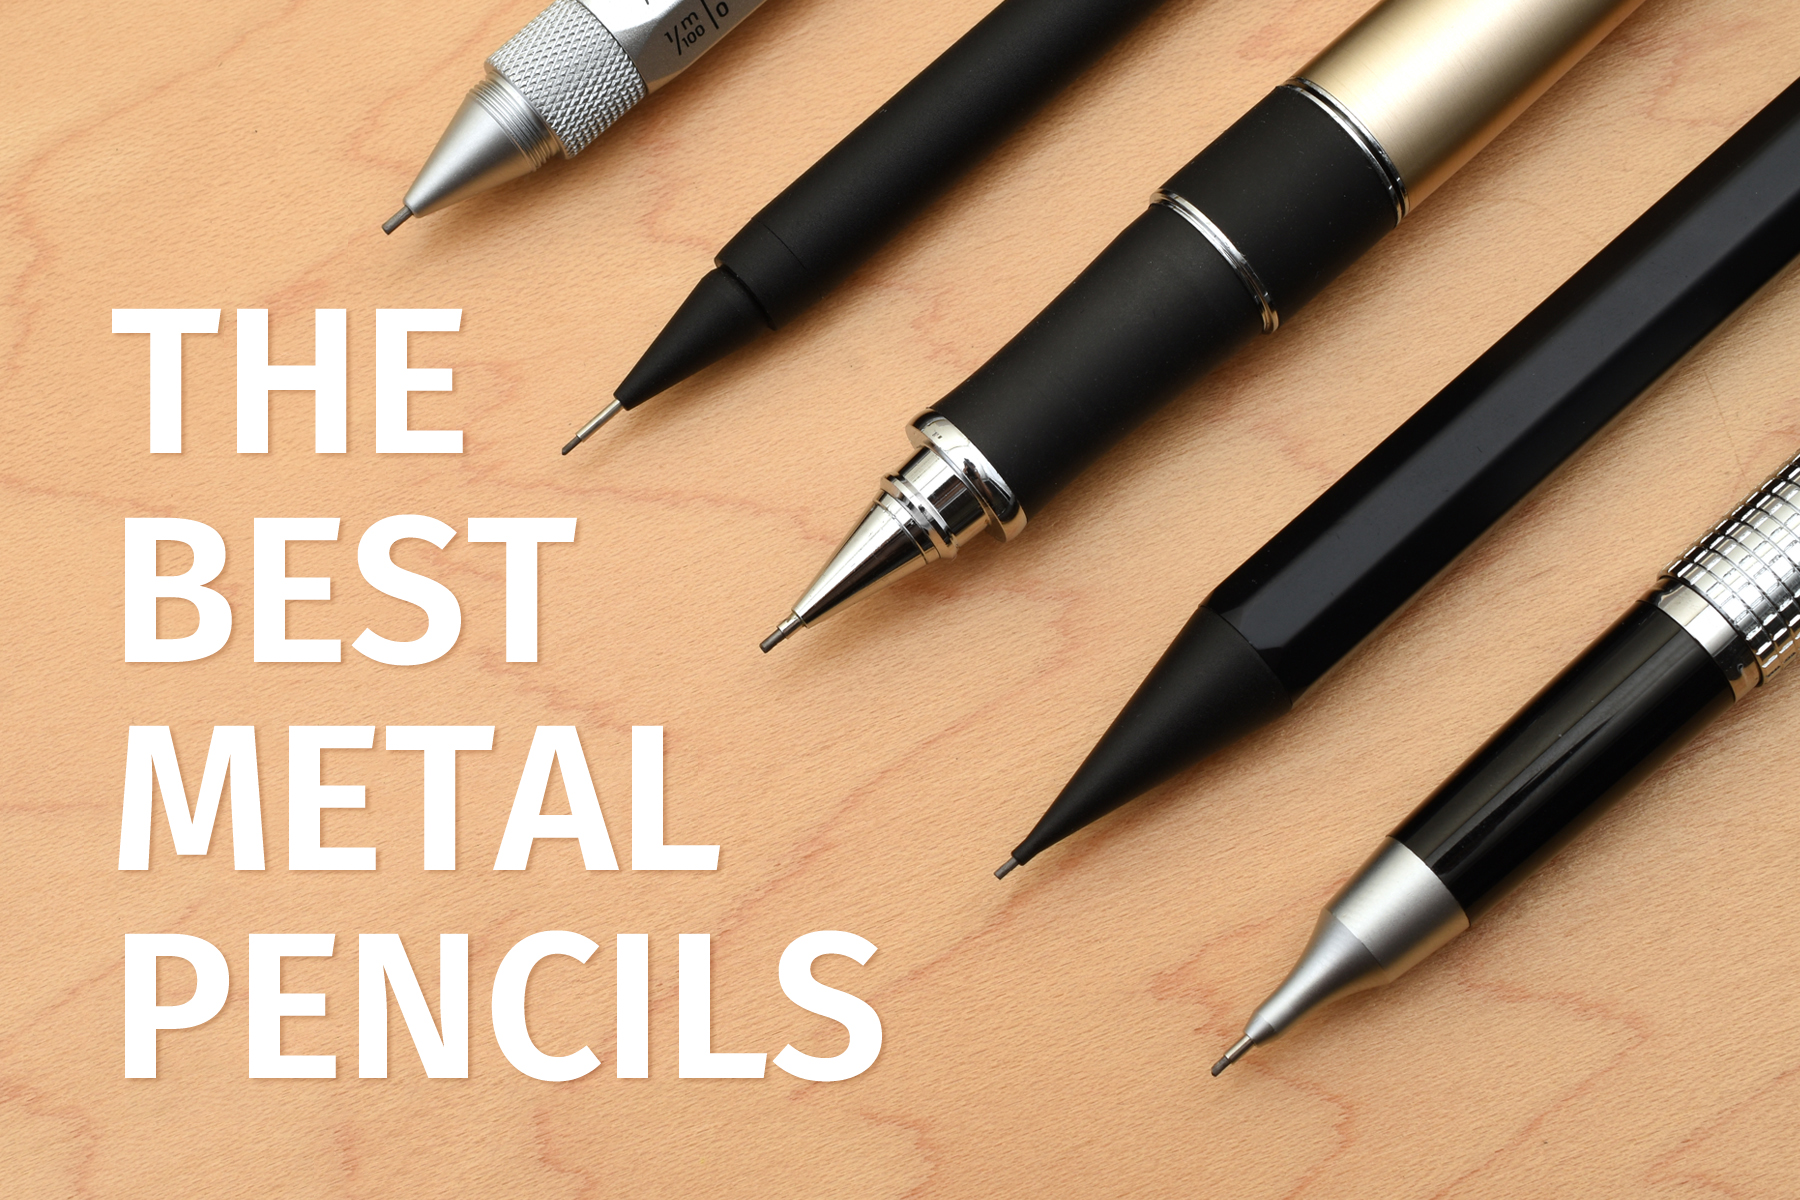 Stainless Steel Mechanical Pencil - Personalised - Handmade & Hand